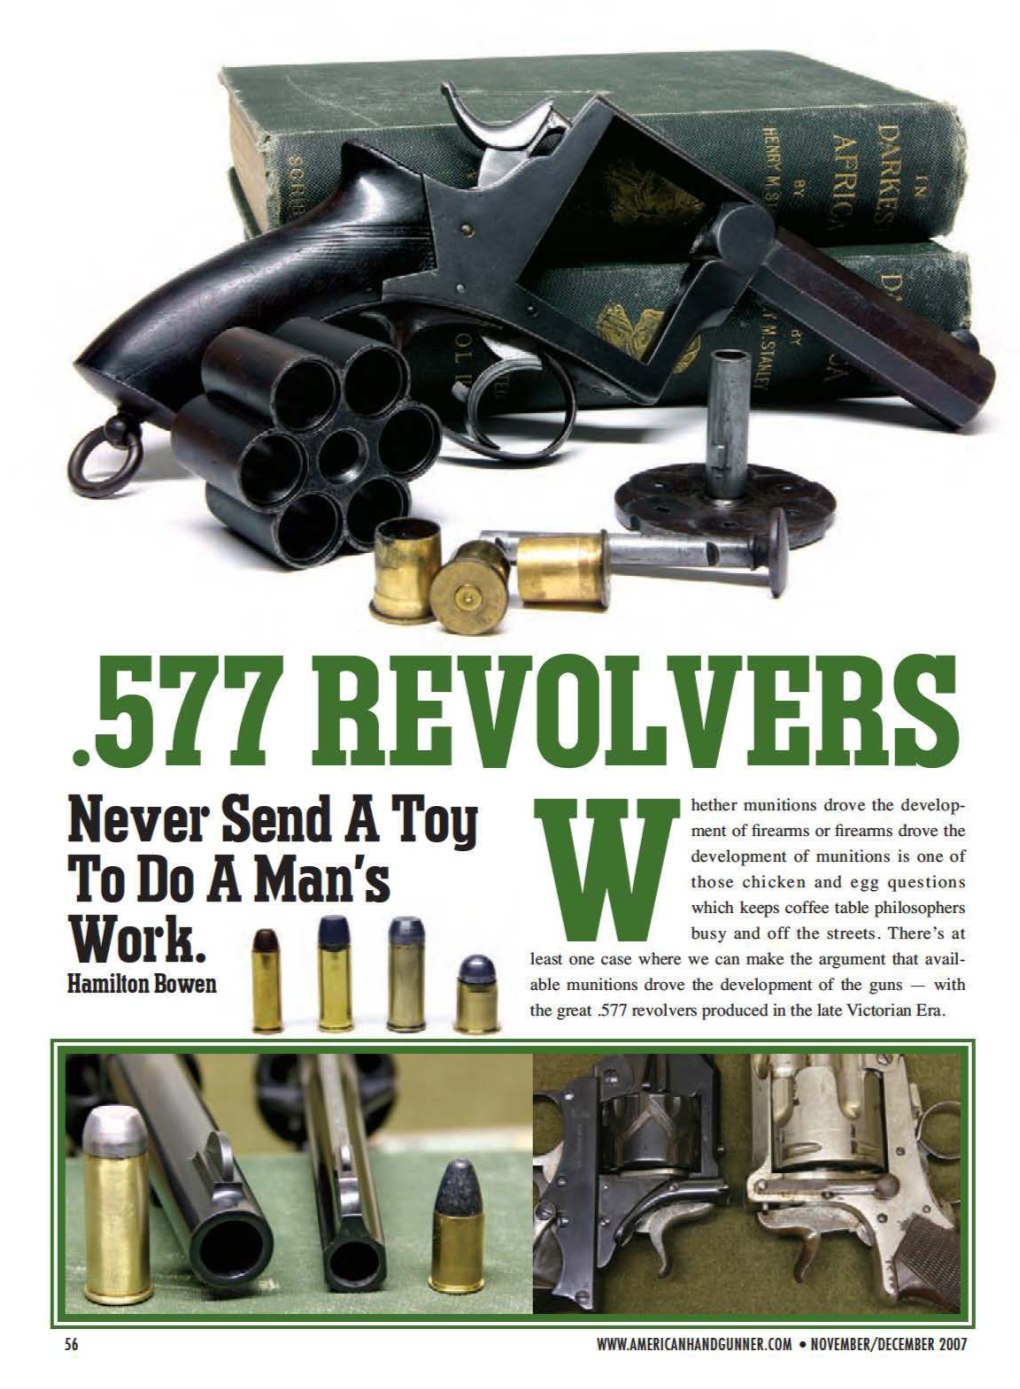 577 Revolvers Is Pretty Bleak